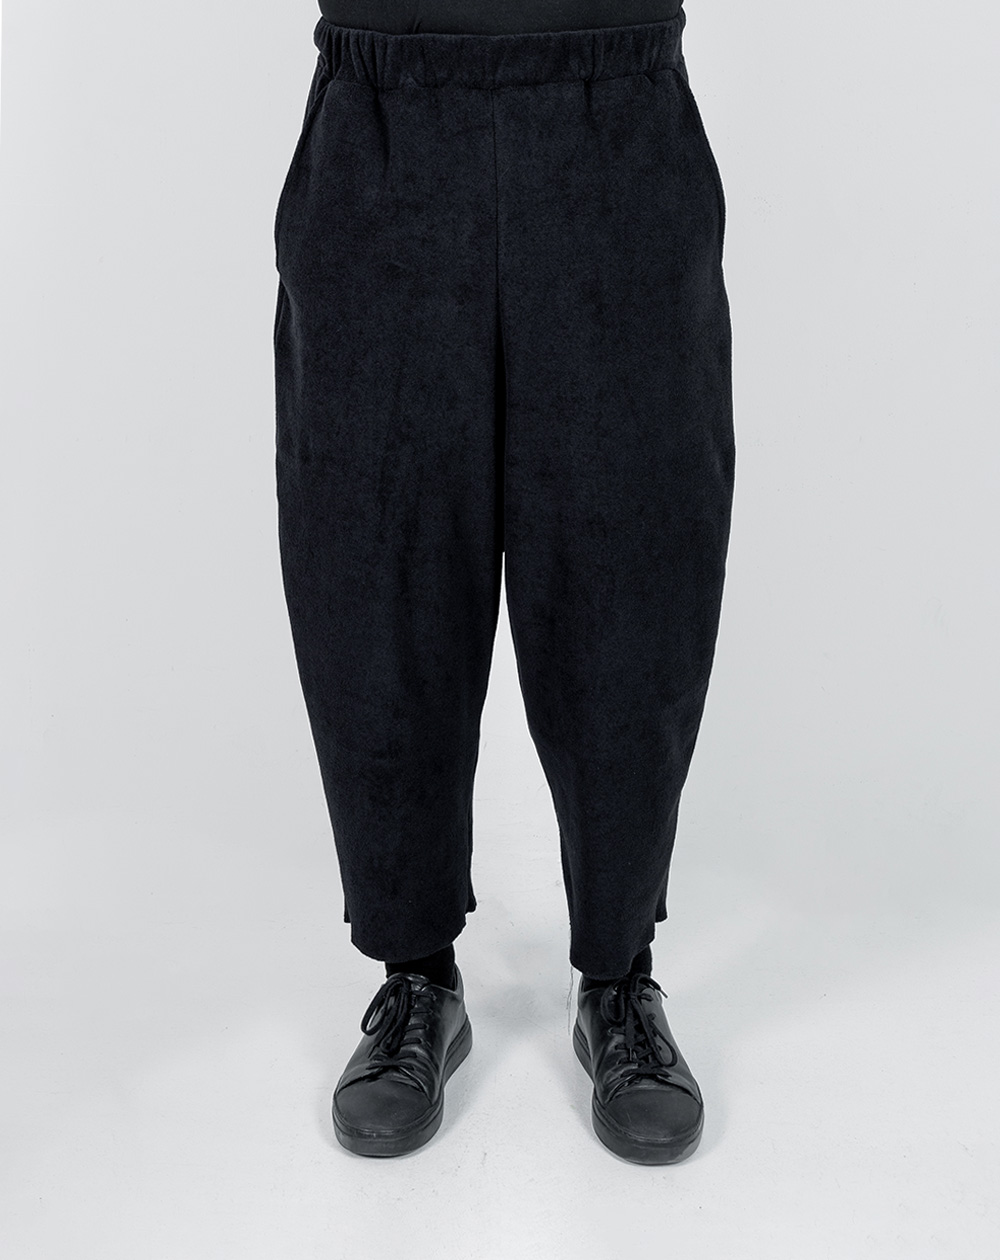 ANTS. SAKE sweatpants in black teddy velours fabric